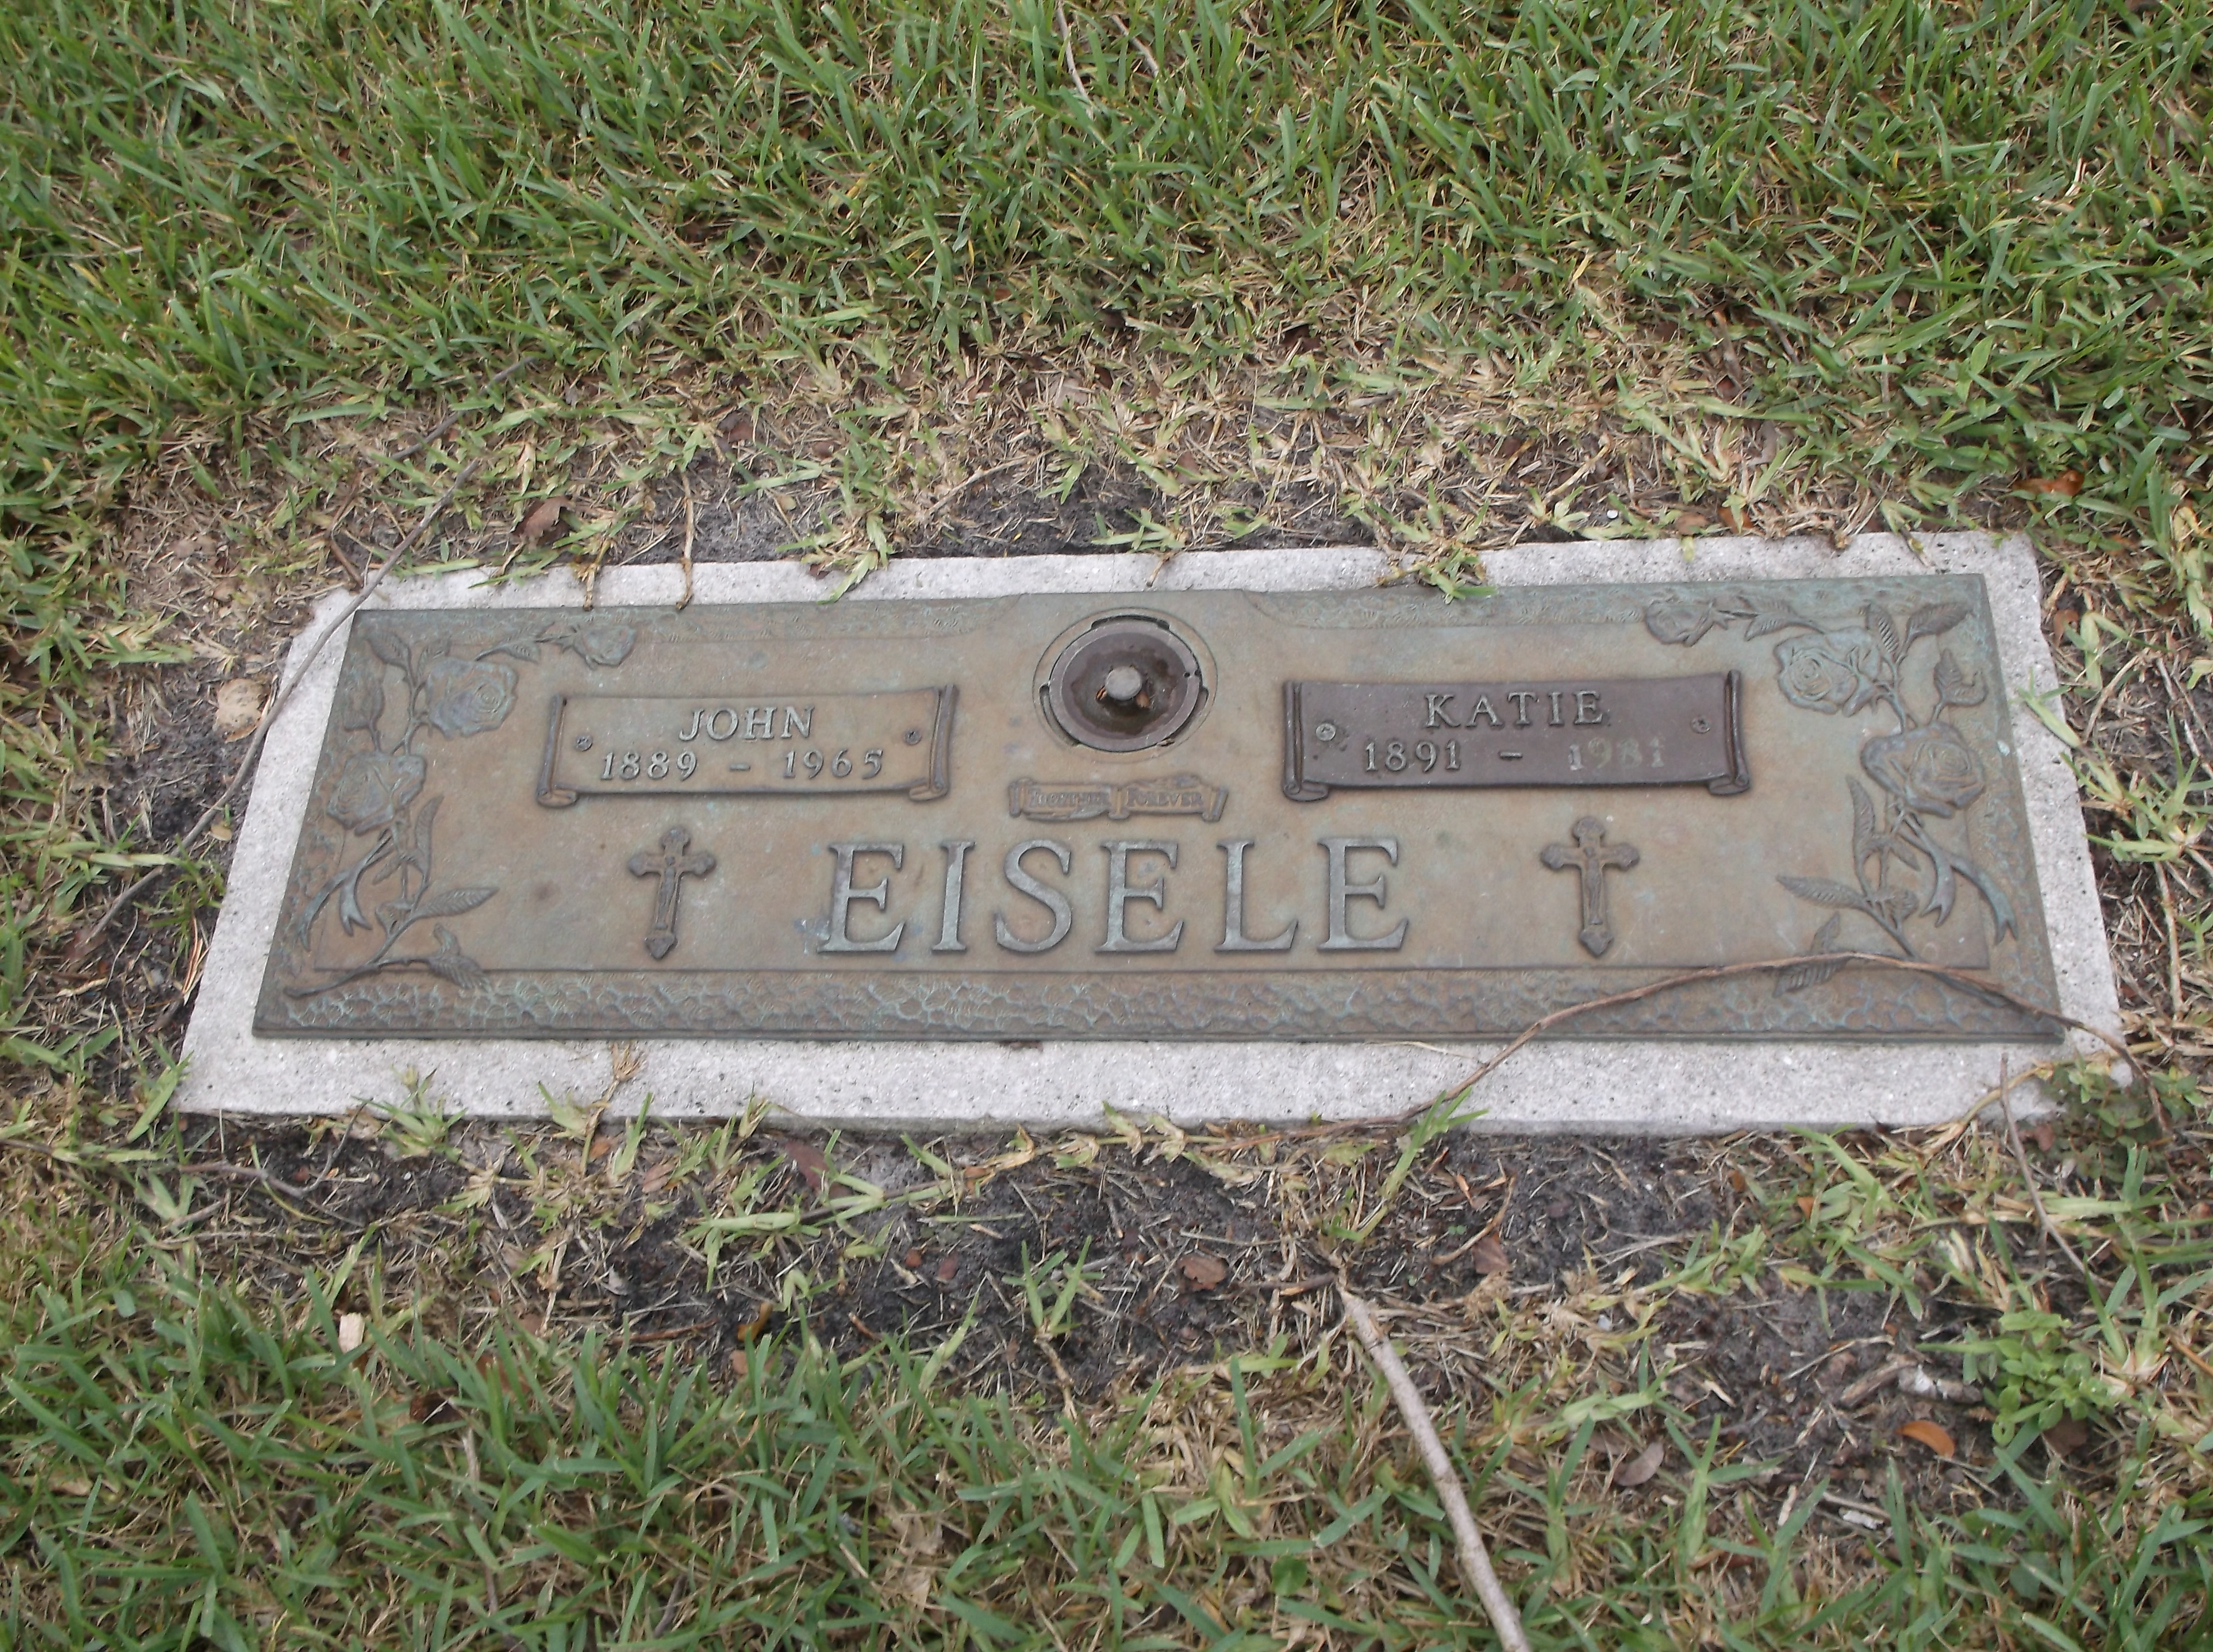 John Eisele